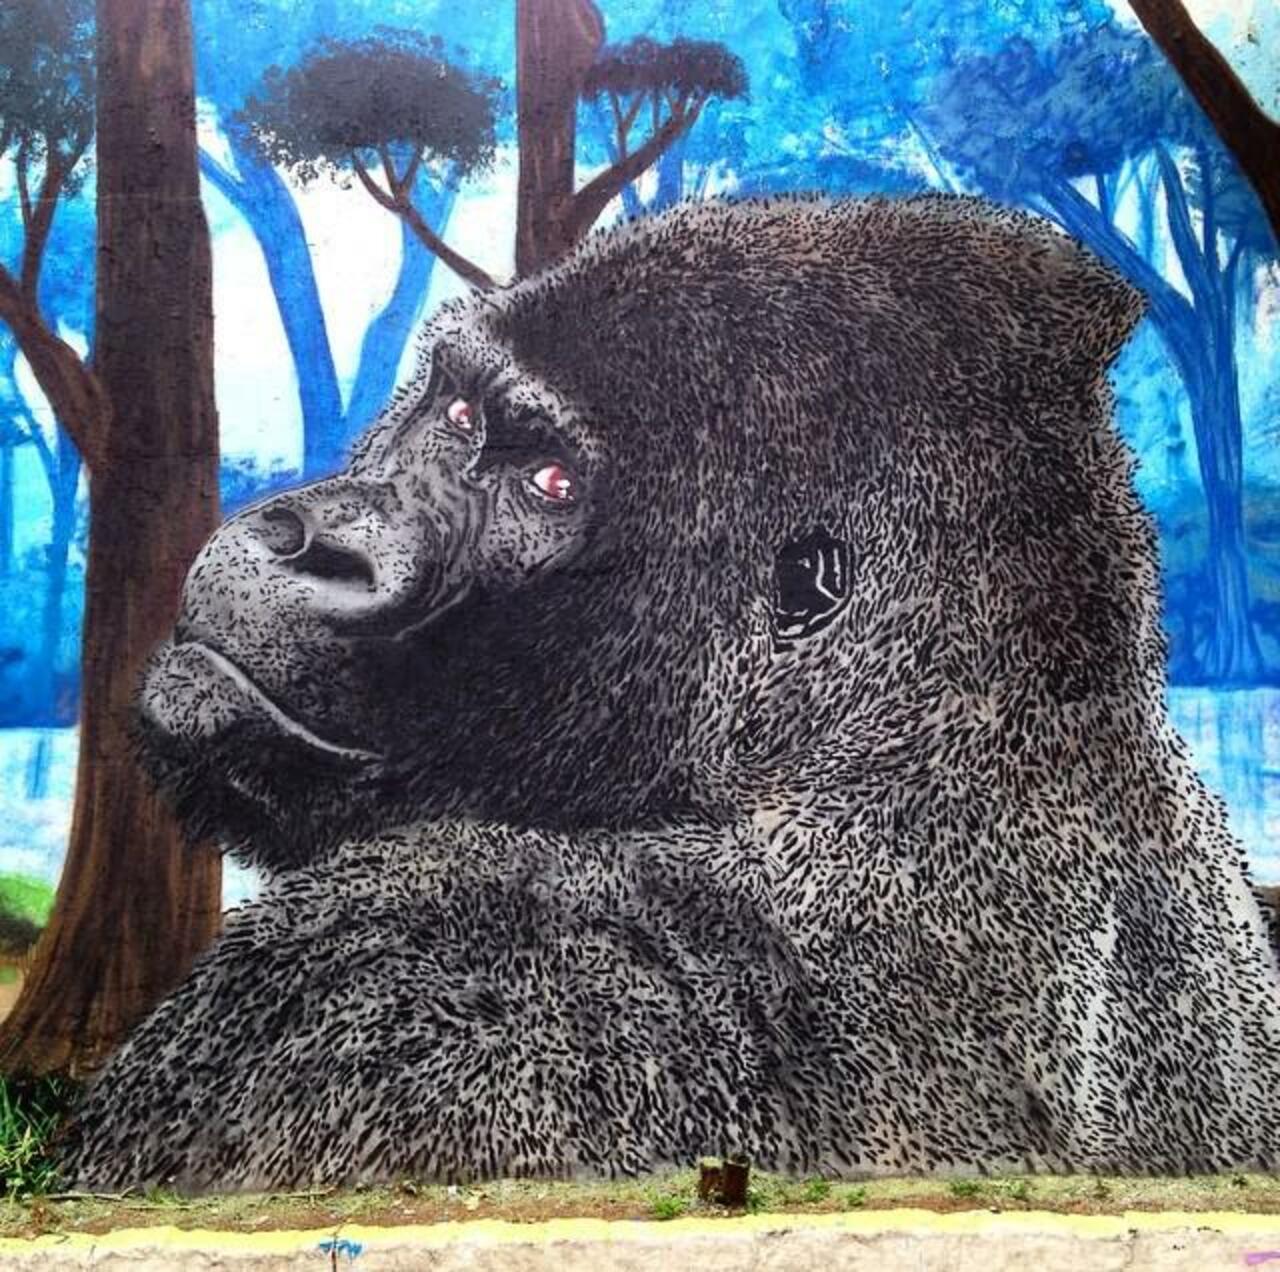 Superb Nature in Street Art piece by Thassio in São Paulo, Brazil  

#art #mural #graffiti #streetart http://t.co/yOh0tRyEzl